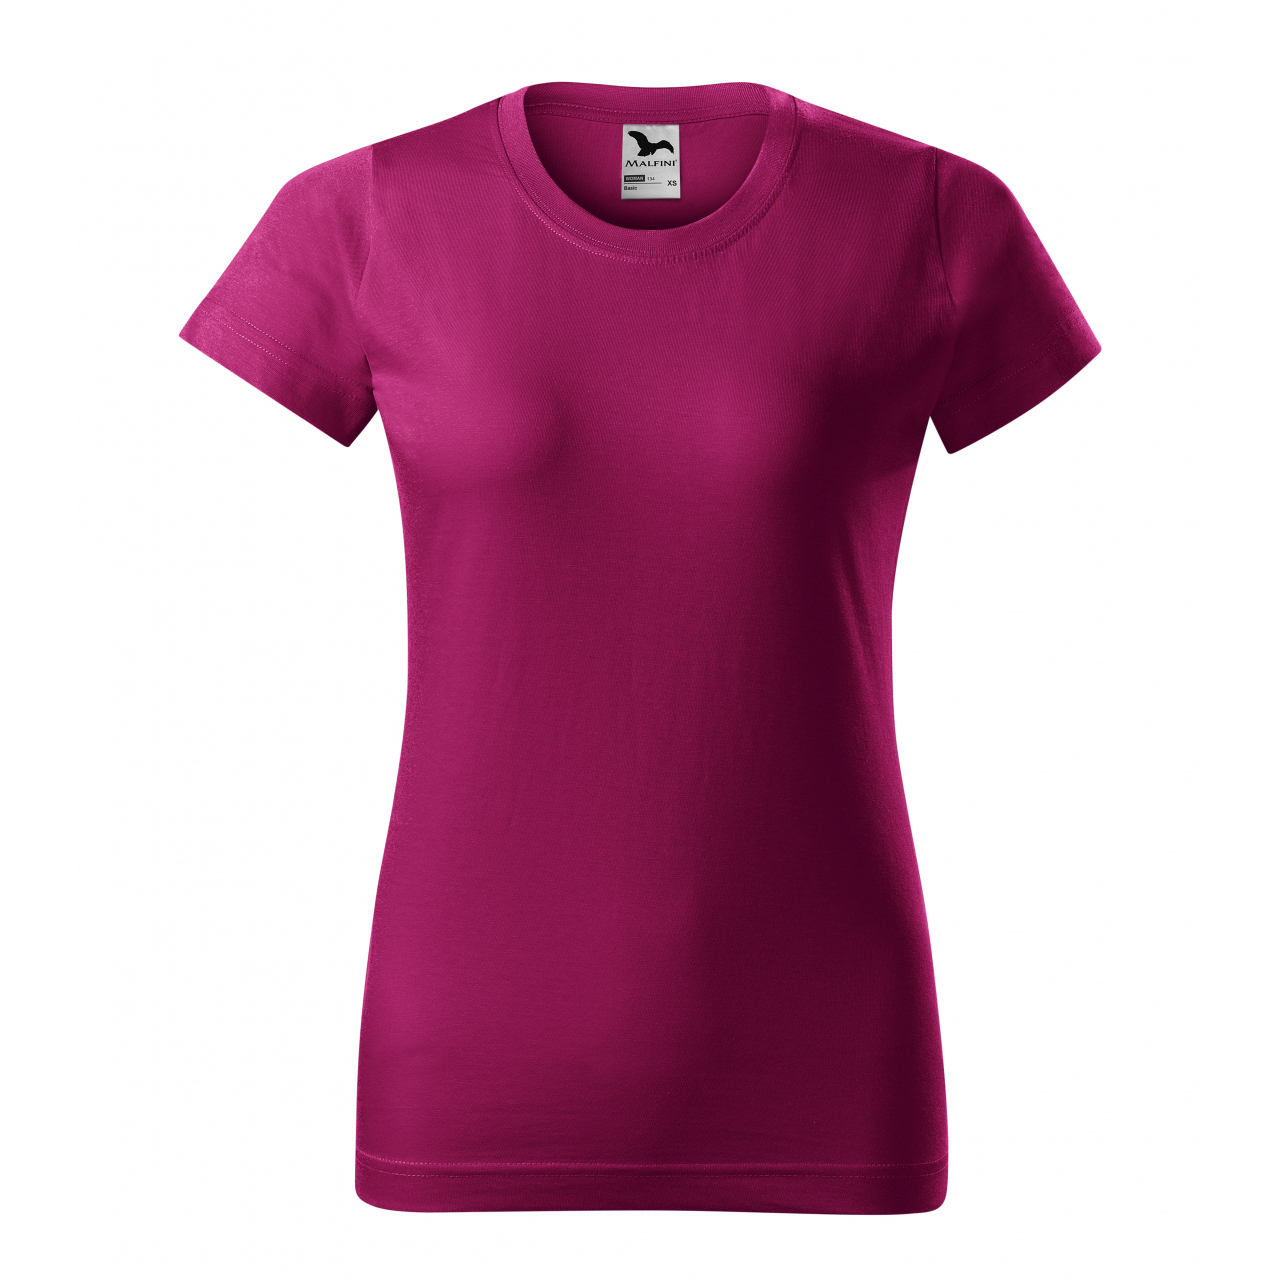 Triko dámské Malfini Basic - růžové-fialové, XL